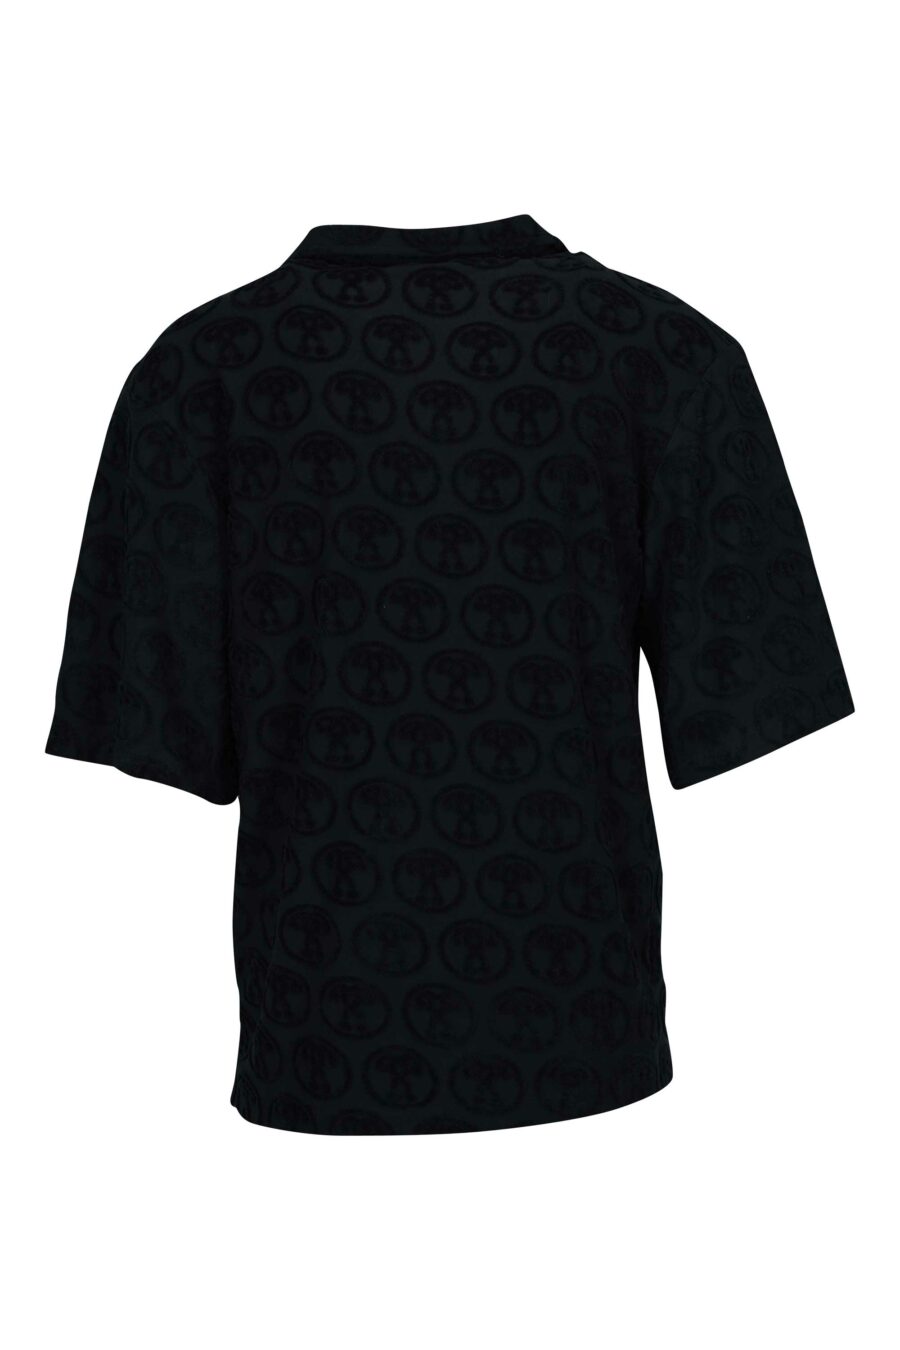 Camisa negra manga corta con "all over logo" doble pregunta - 667113670744 1